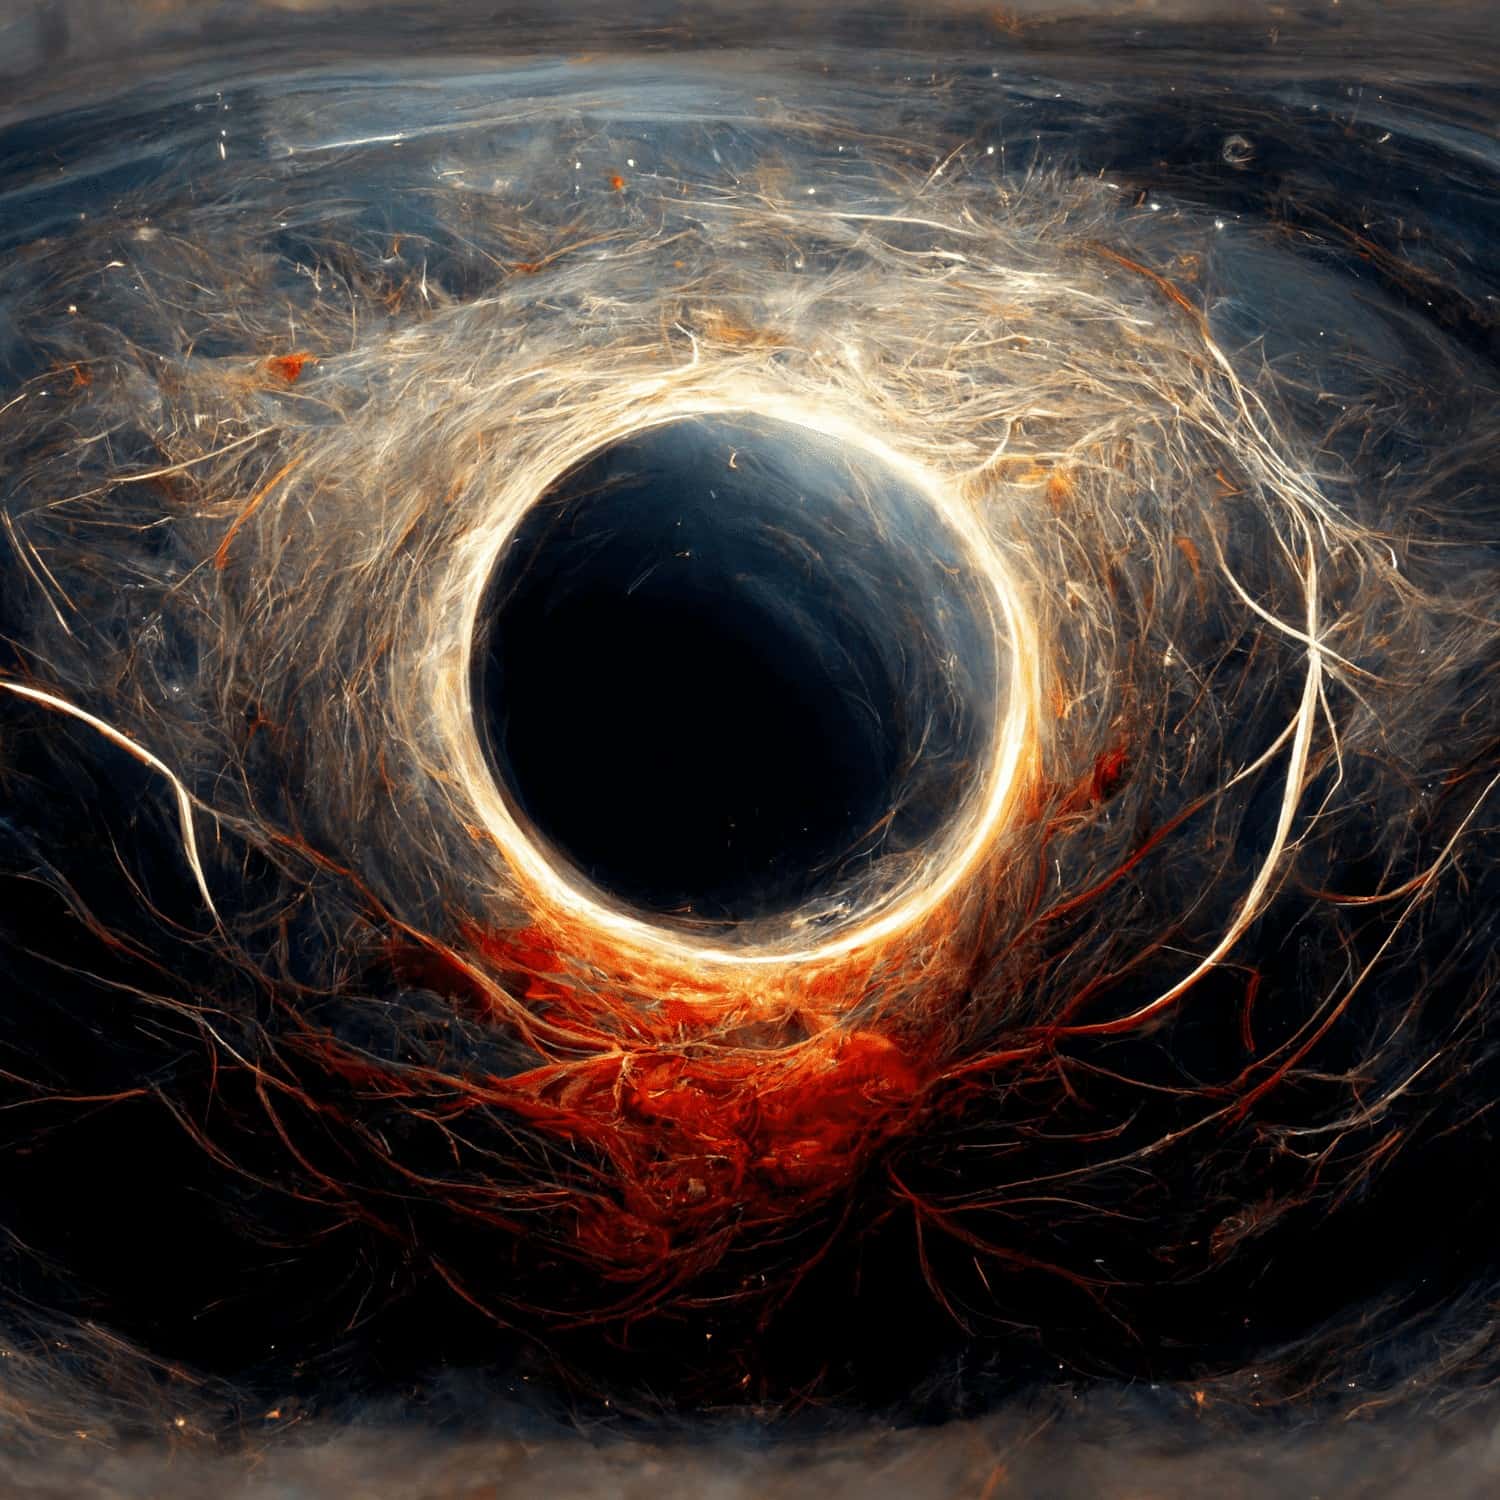 oinmaru concept art A black hole warping space time. 9d9e11eb 6017 4a8c 9e51 e6e9c7378d91